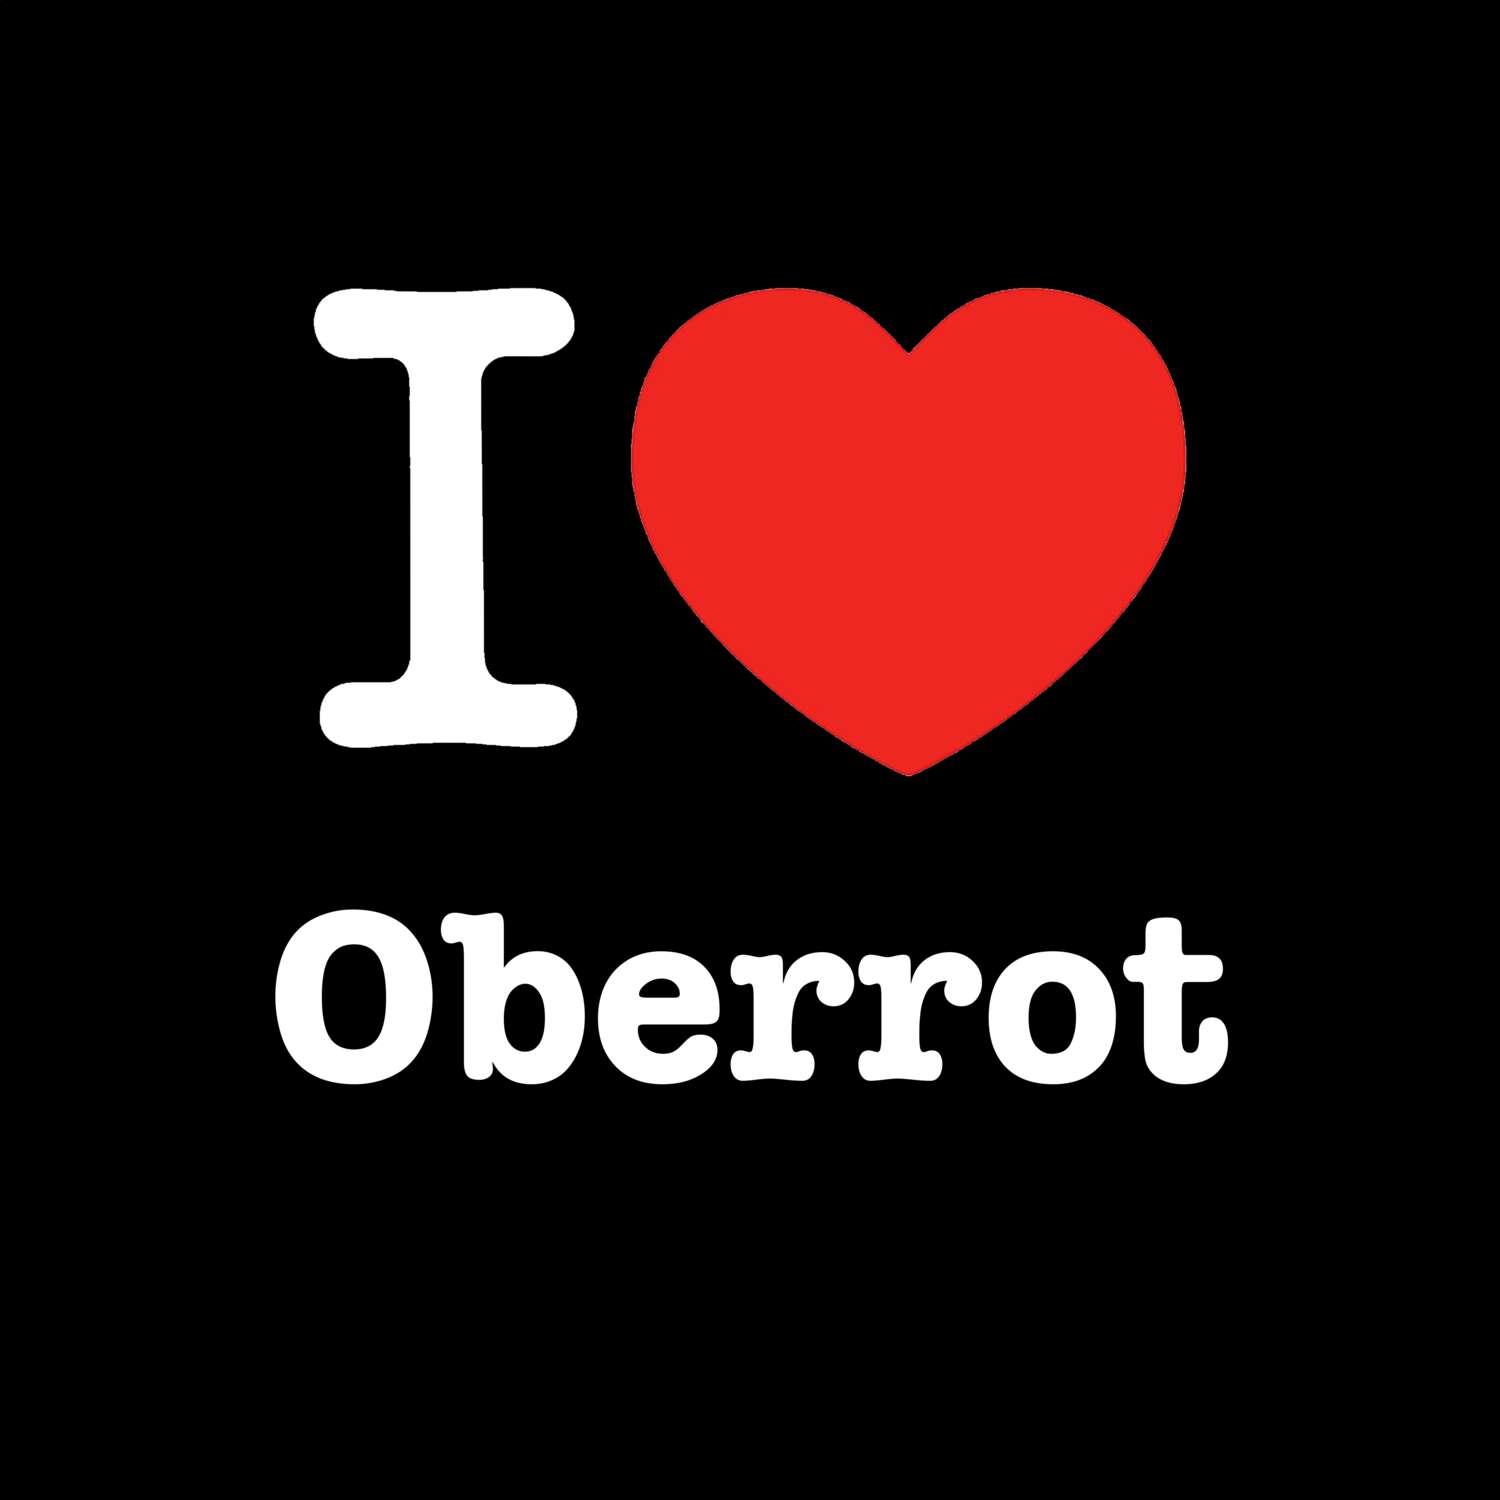 Oberrot T-Shirt »I love«